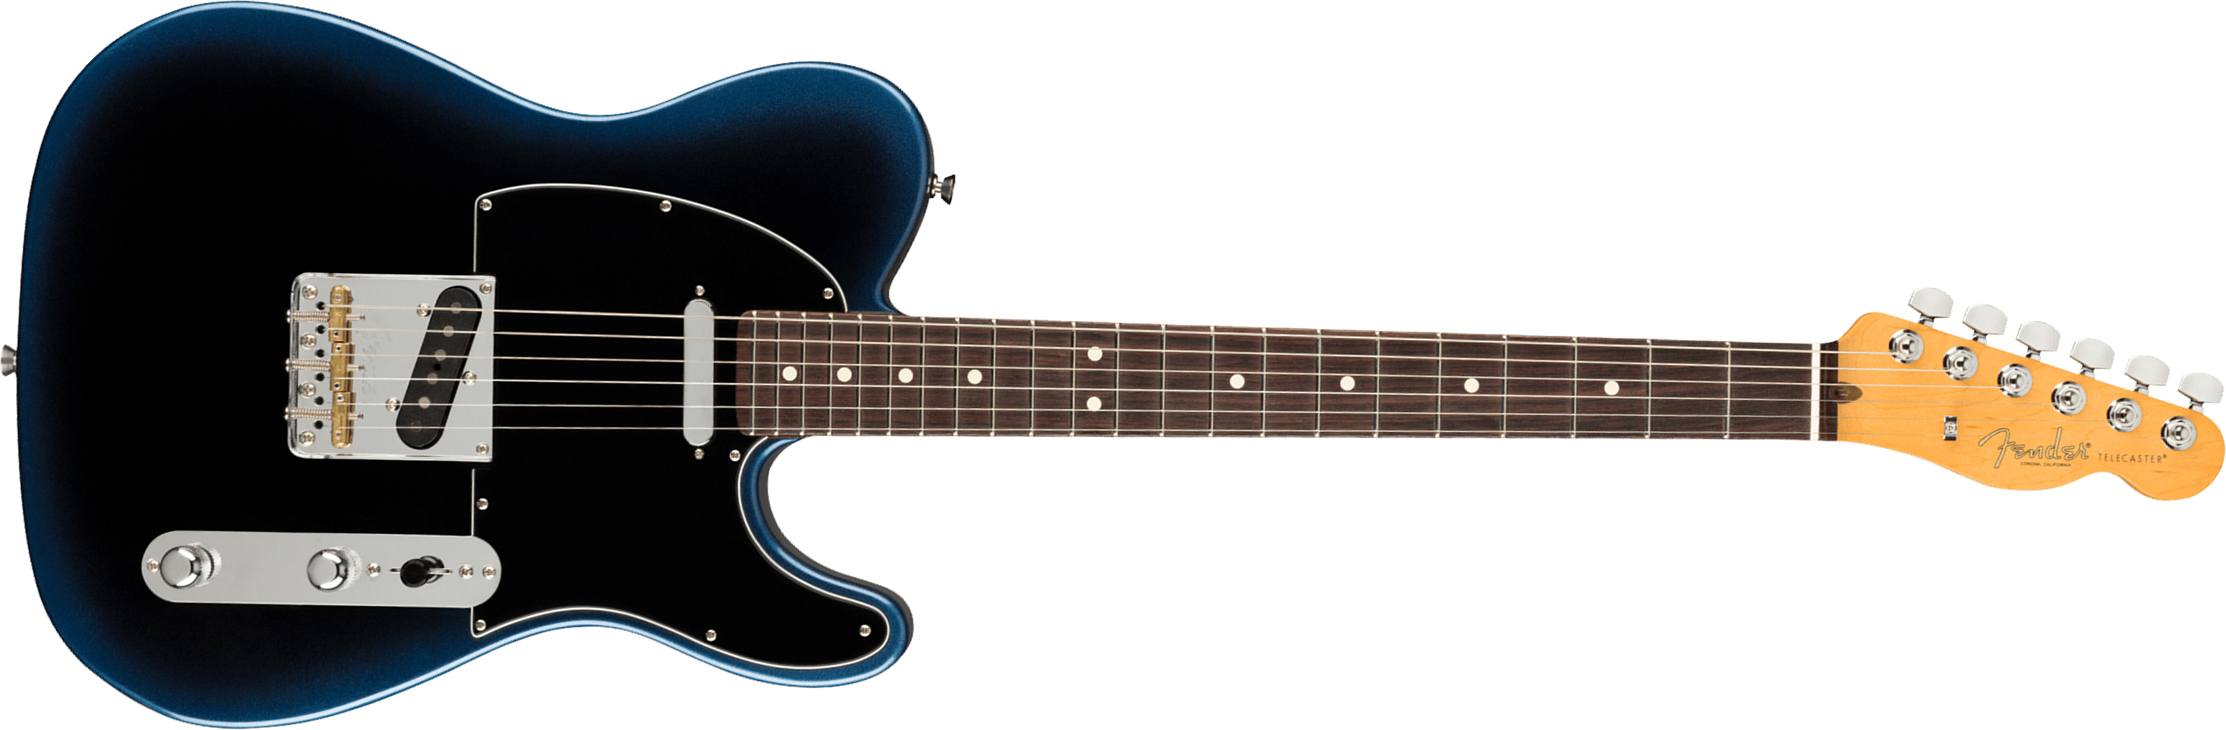 Fender Tele American Professional Ii Usa Rw - Dark Night - Guitarra eléctrica con forma de tel - Main picture